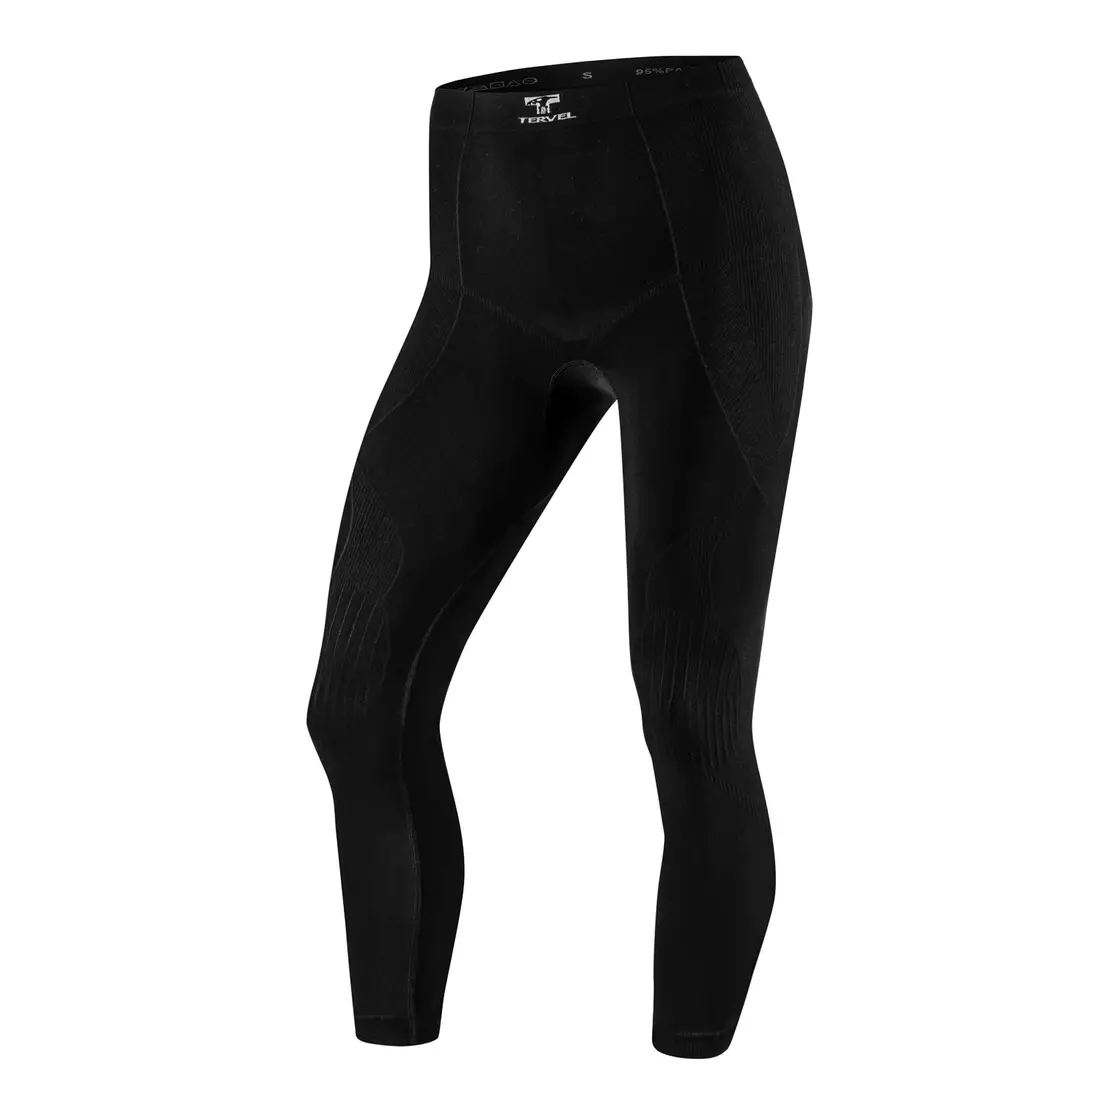 TERVEL - COMFORTLINE COM 4002 - women's thermoactive leggings, color: Black